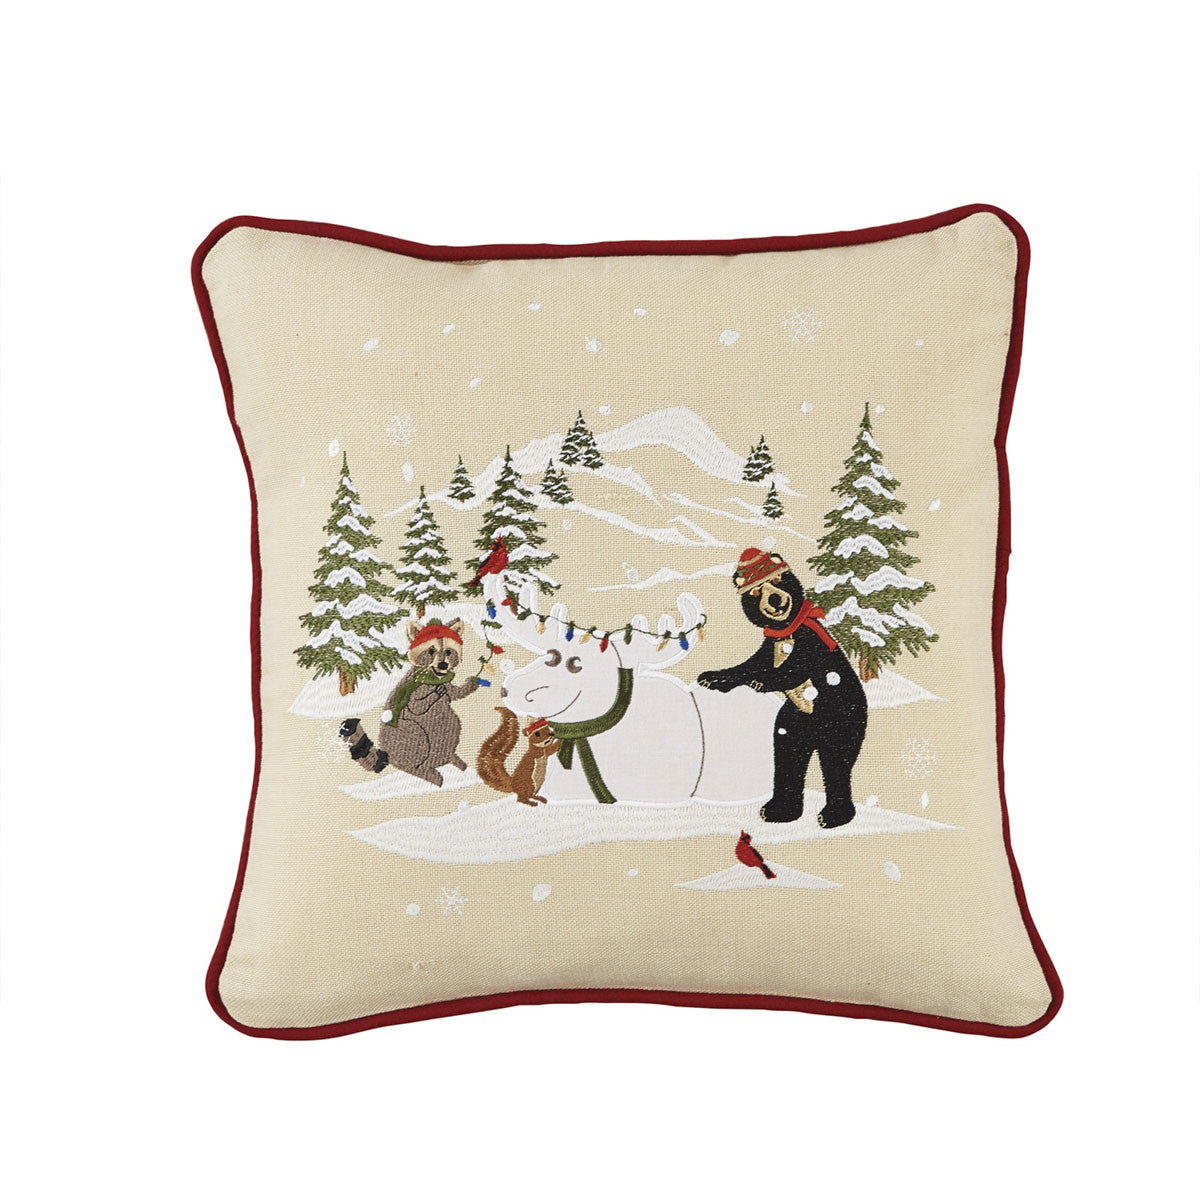 Snowmoose Pillow Feather Down Insert - 16" Set of 2 Park Designs